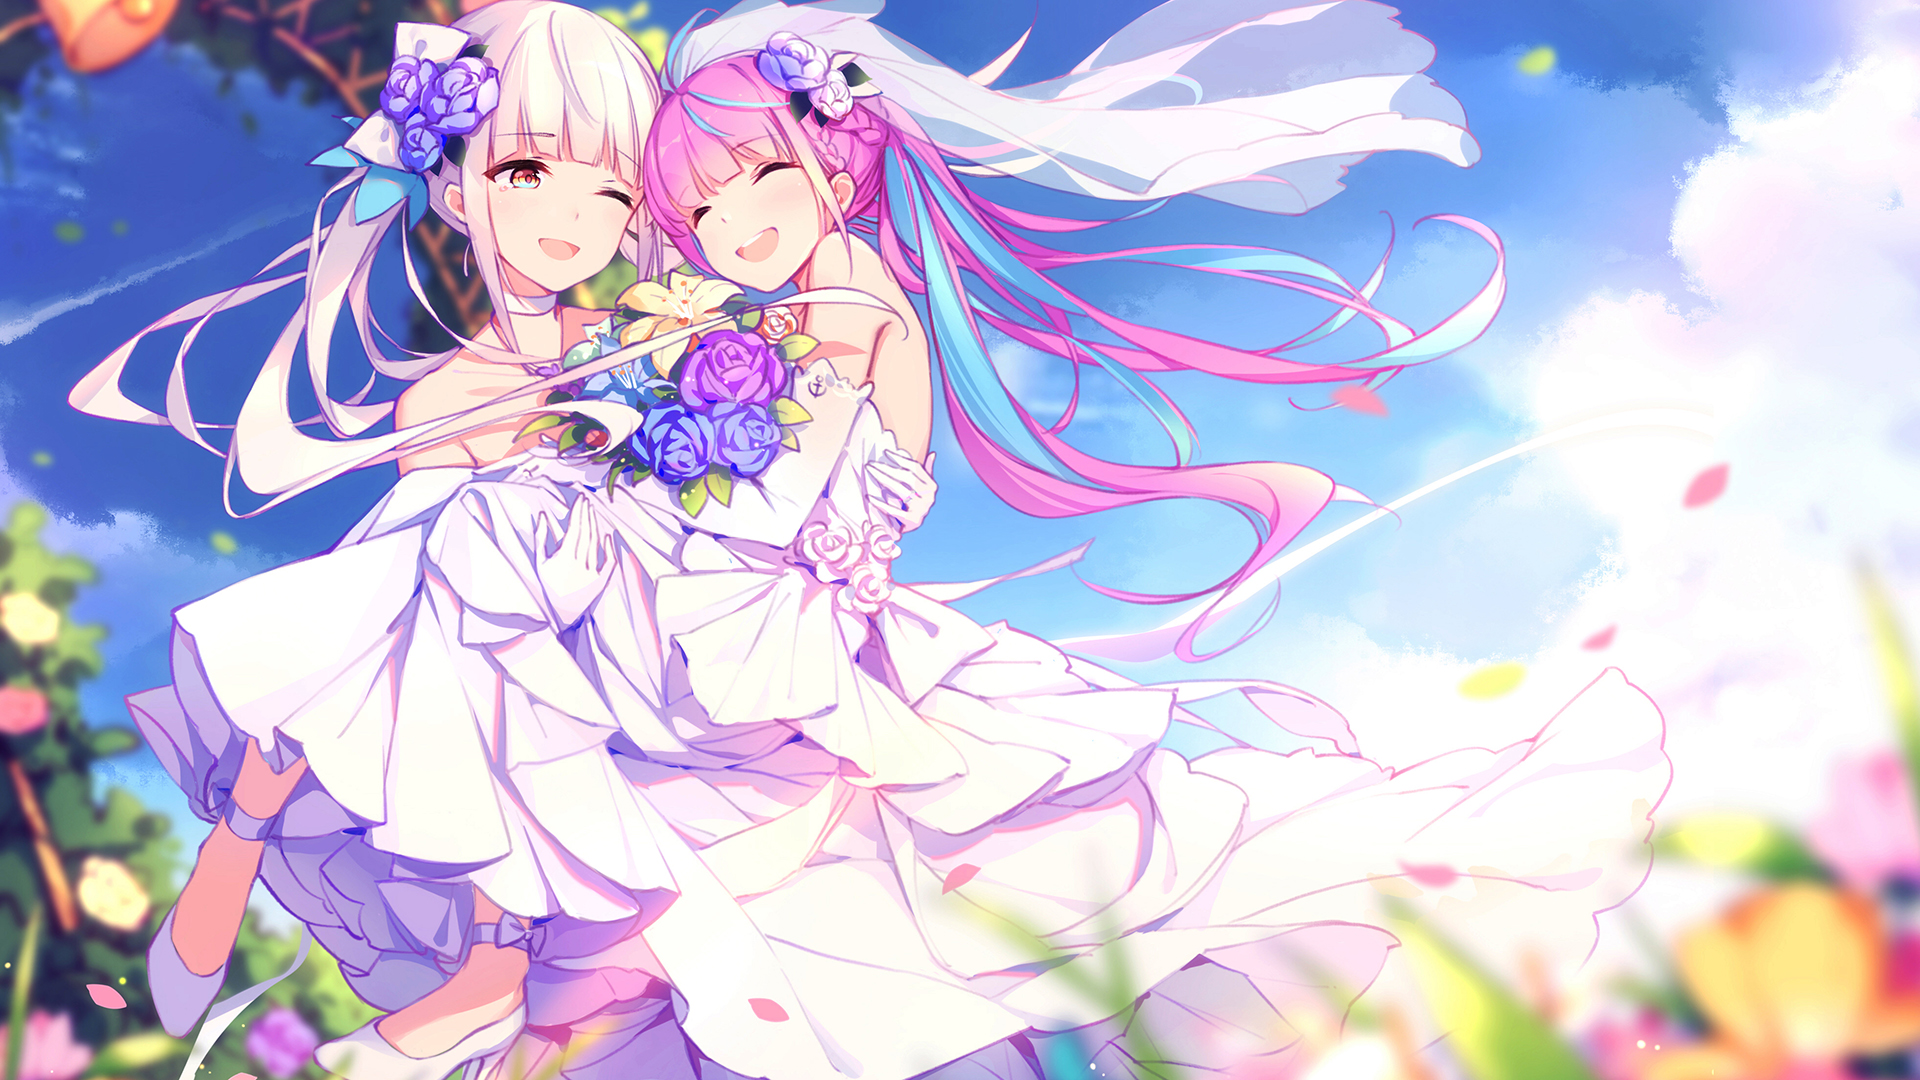 Anime 1920x1080 anime girls anime wedding dress closed eyes yuri lesbians multi-colored hair flowers Hololive Virtual Youtuber Kagura Mea Minato Aqua Timeo petals